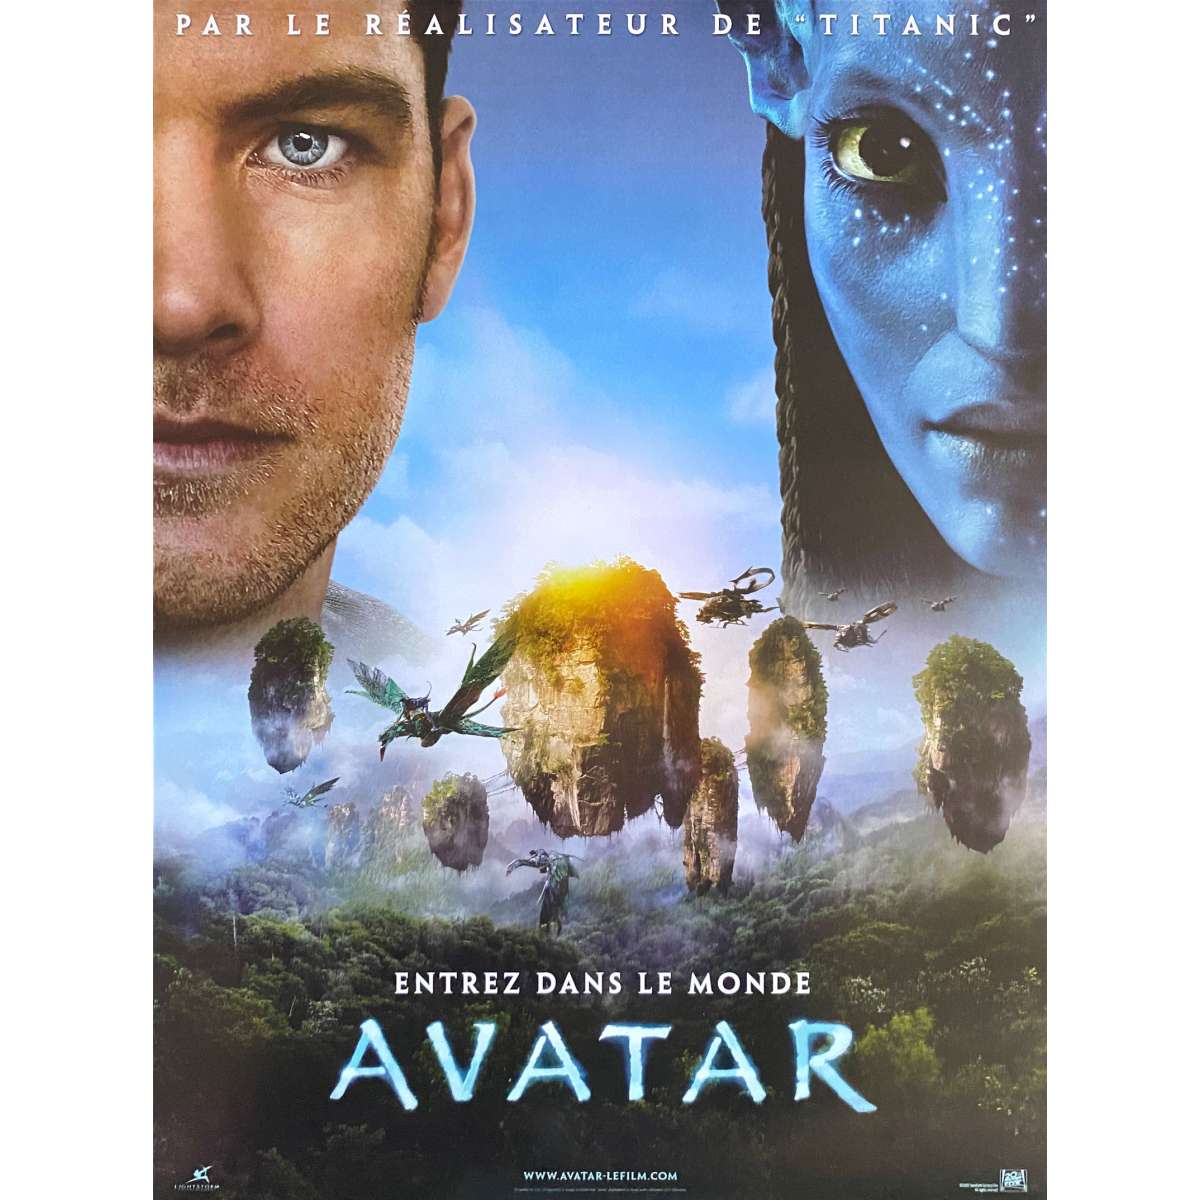 Avatar 2 Movie New Trailer Poster  Avatar Movie Poster  Movie Poster  Design in Photoshop  2022  YouTube